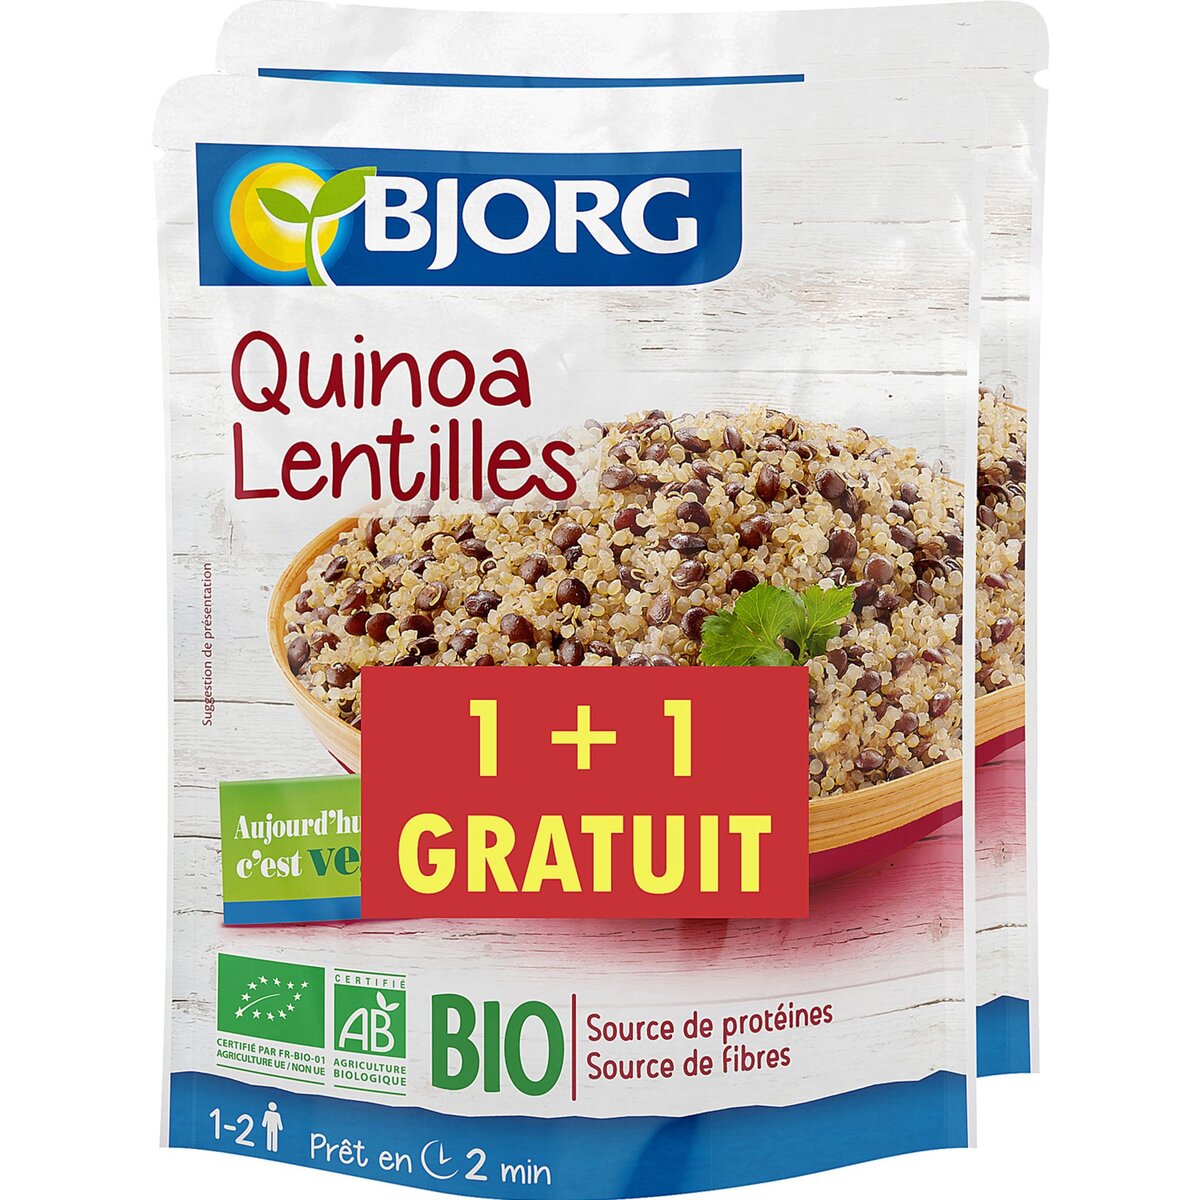 BJORG Bjorg quinoa lentilles bio 250g +250g offert